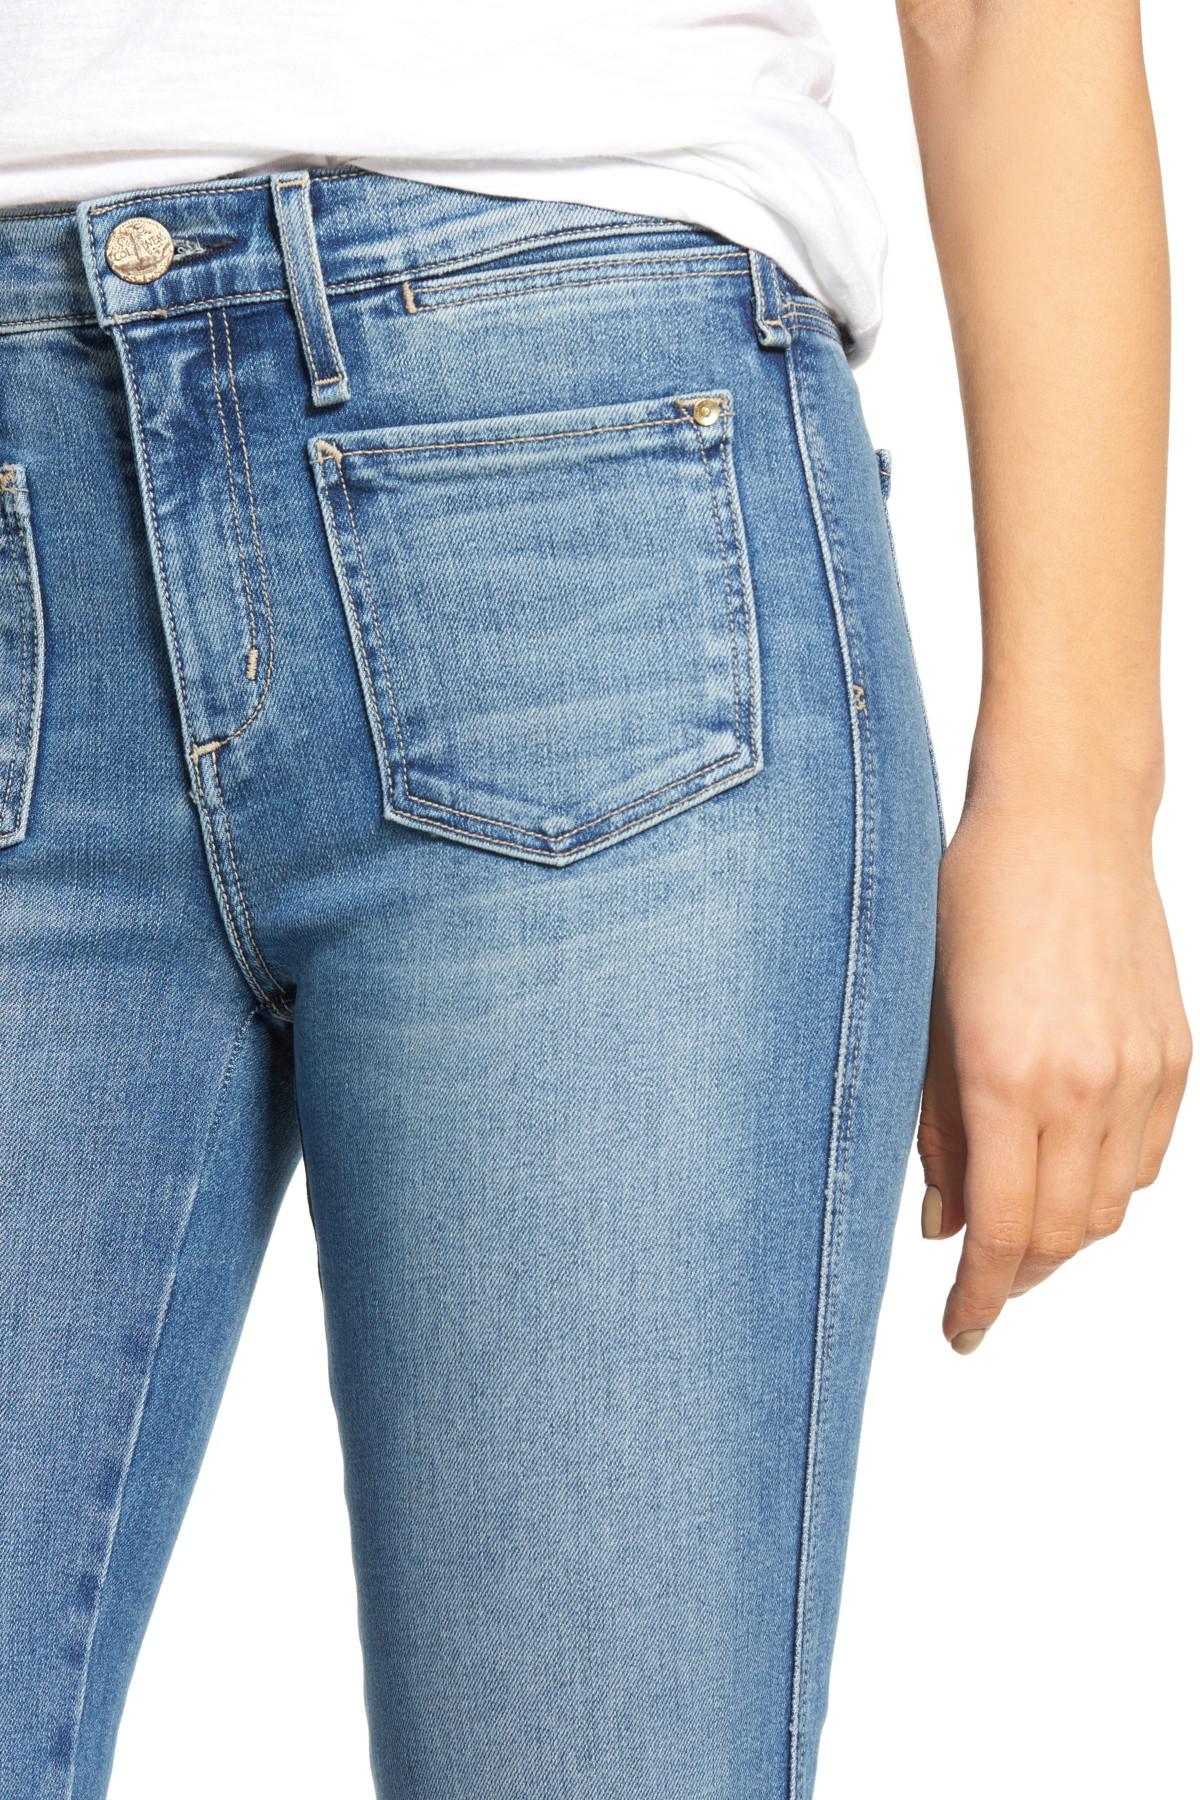 Mcguire Denim Valensi Patch Pocket Crop Flare Jeans in Blue - Lyst